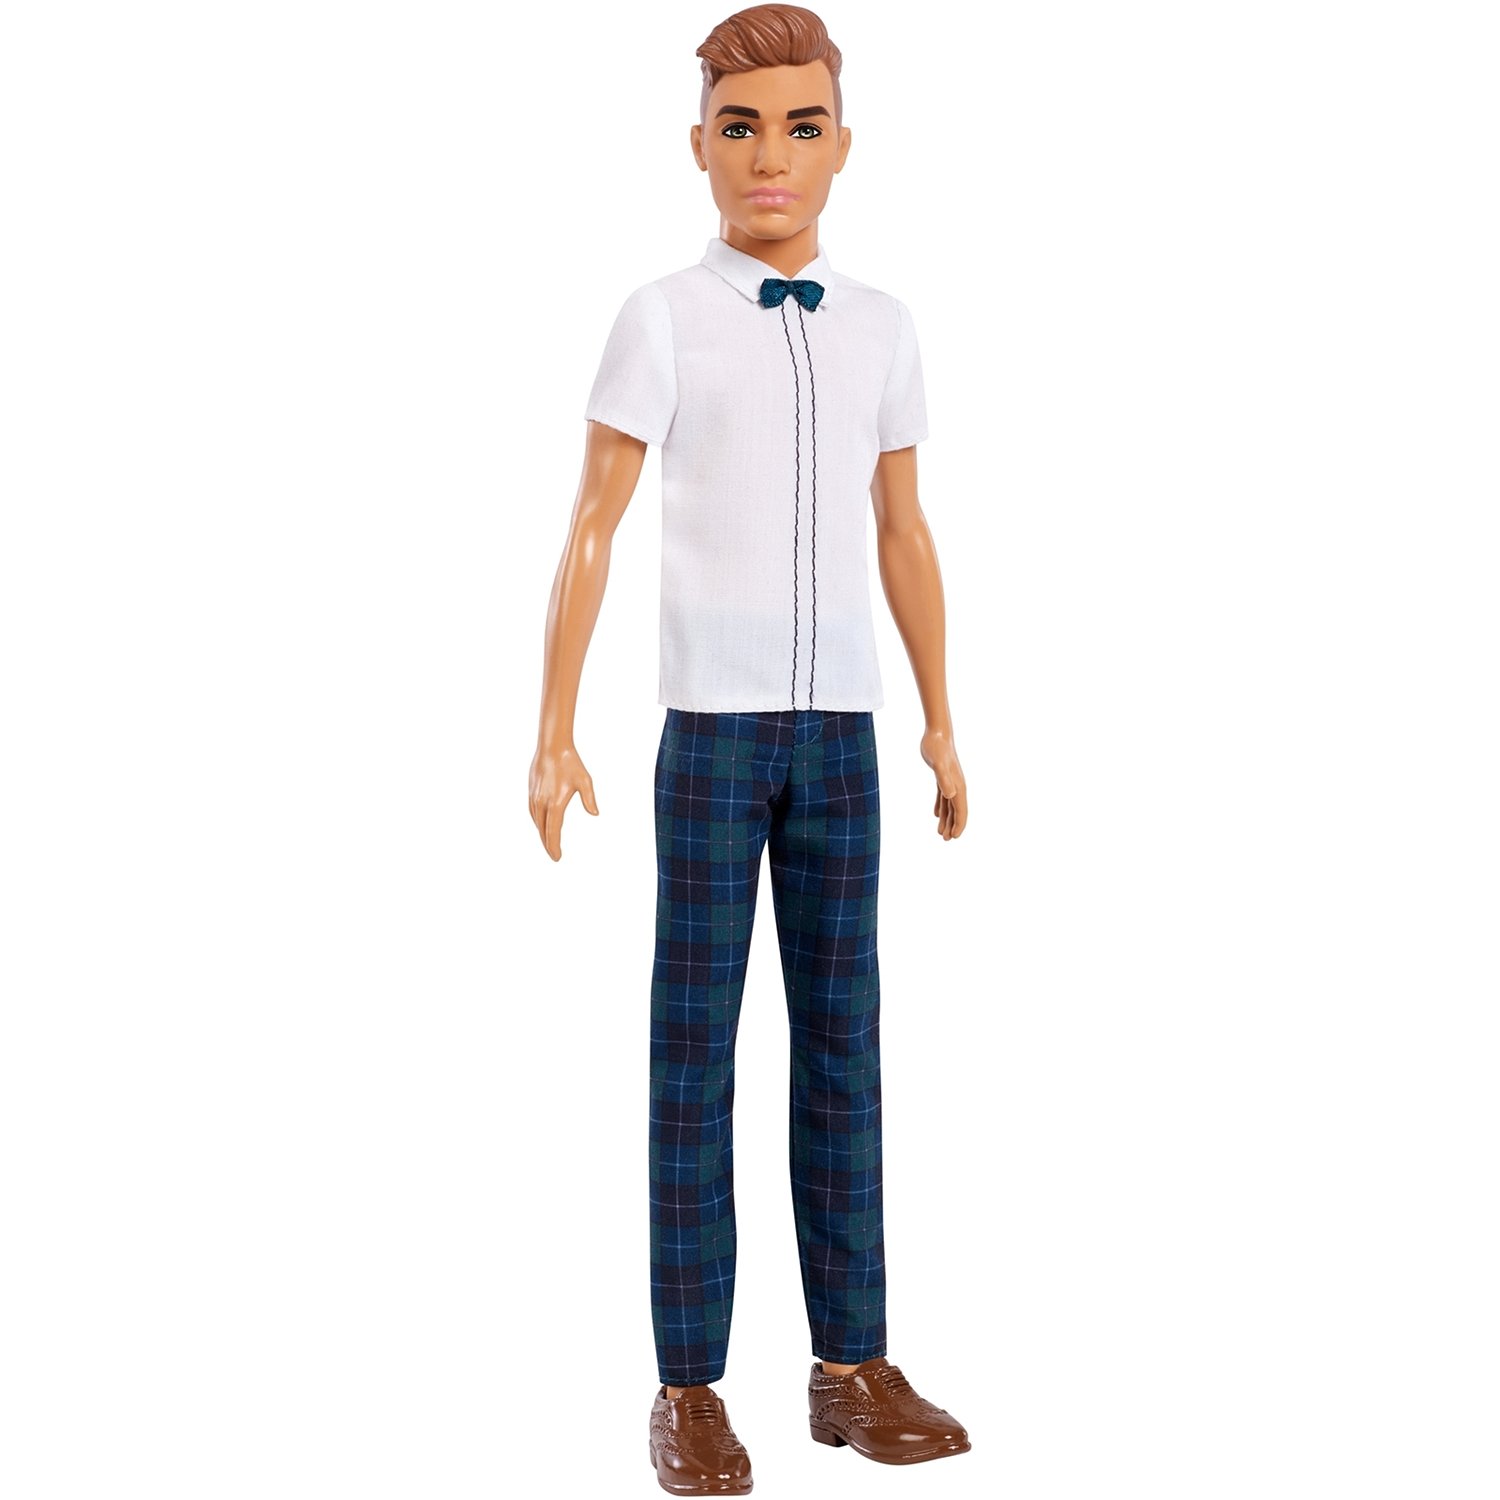 Кукла Barbie Мода Кен худощавый, 29 см, FXL64